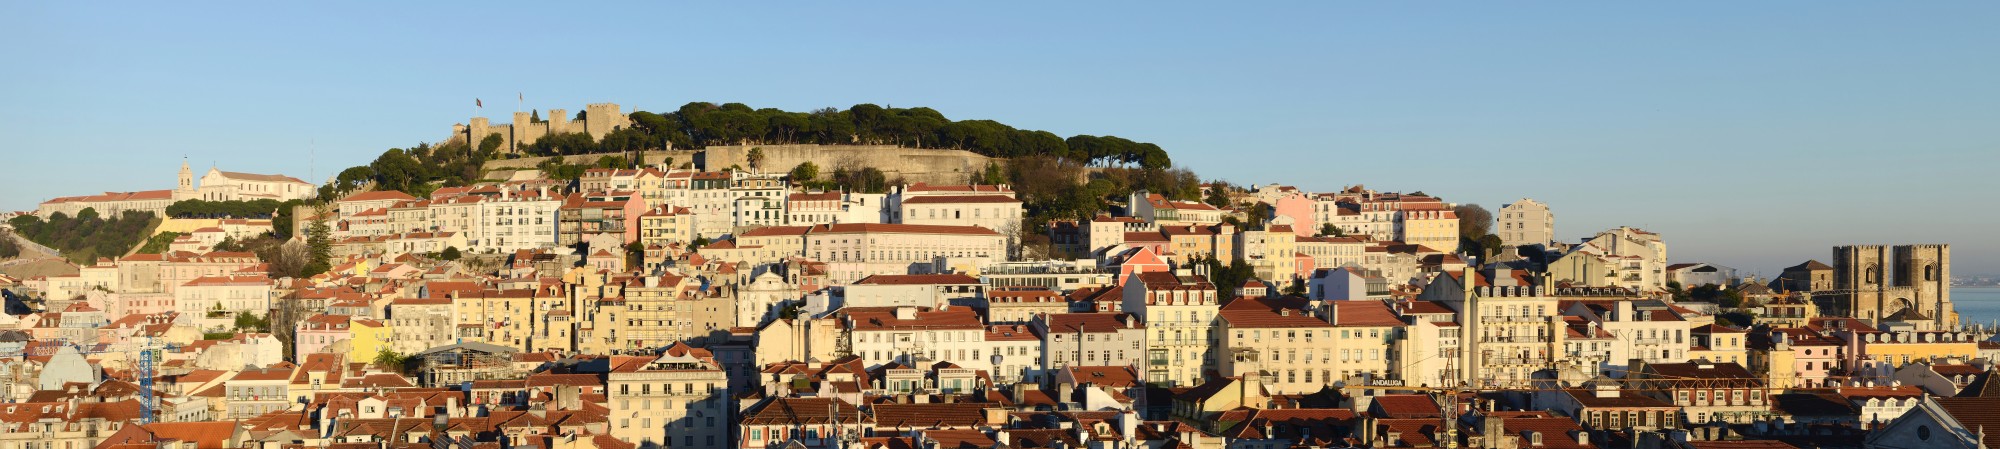 Lisboa January 2015-13a